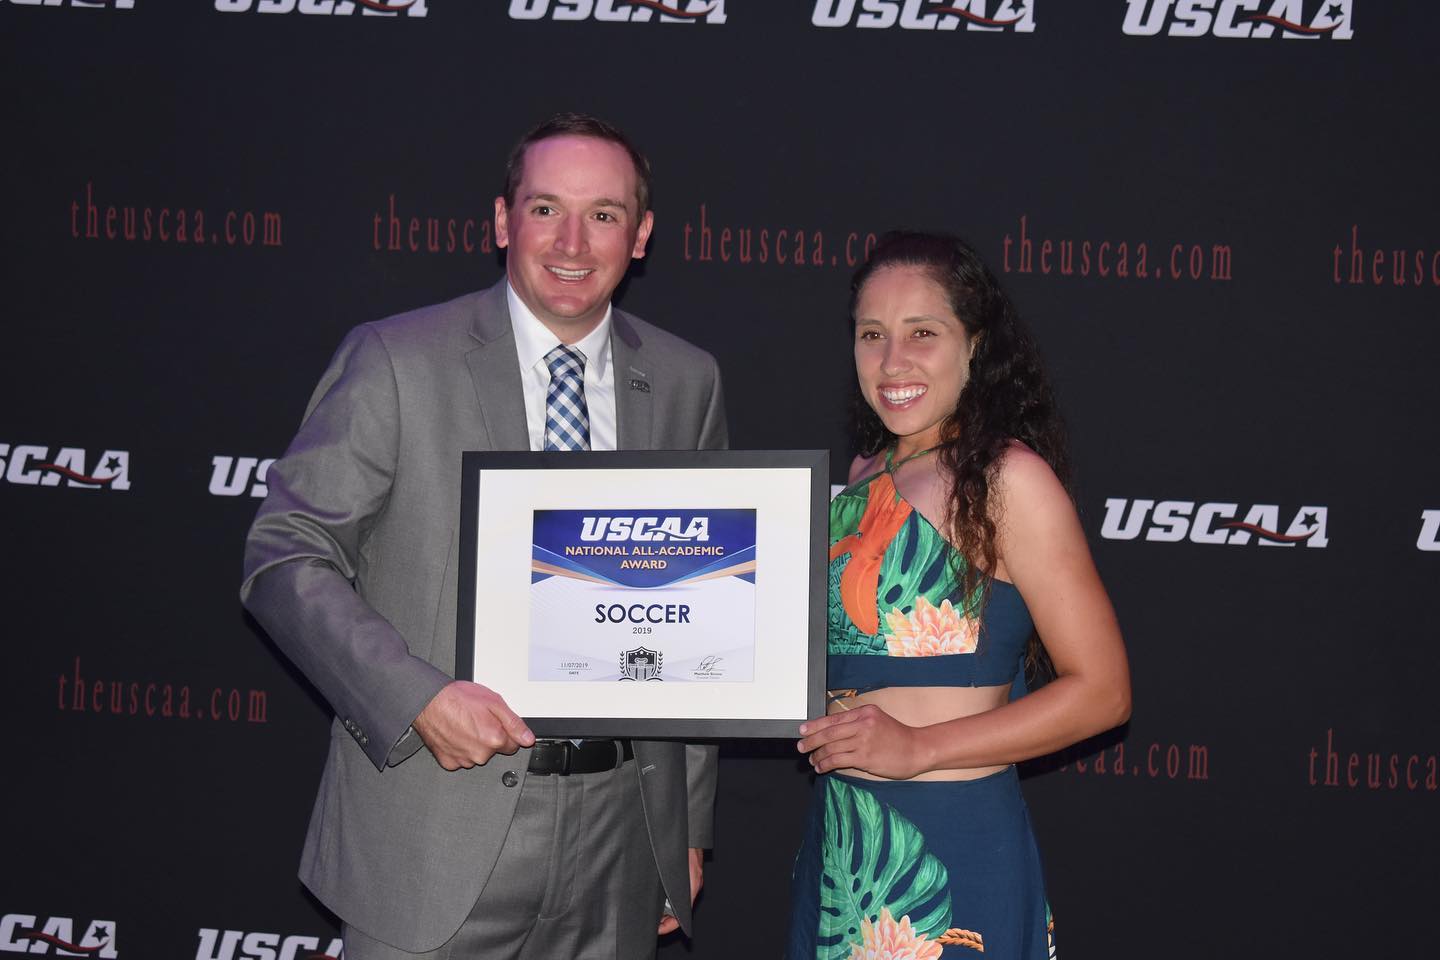 Women's soccer player Juliana Oliveira Receiving the All-Academic award